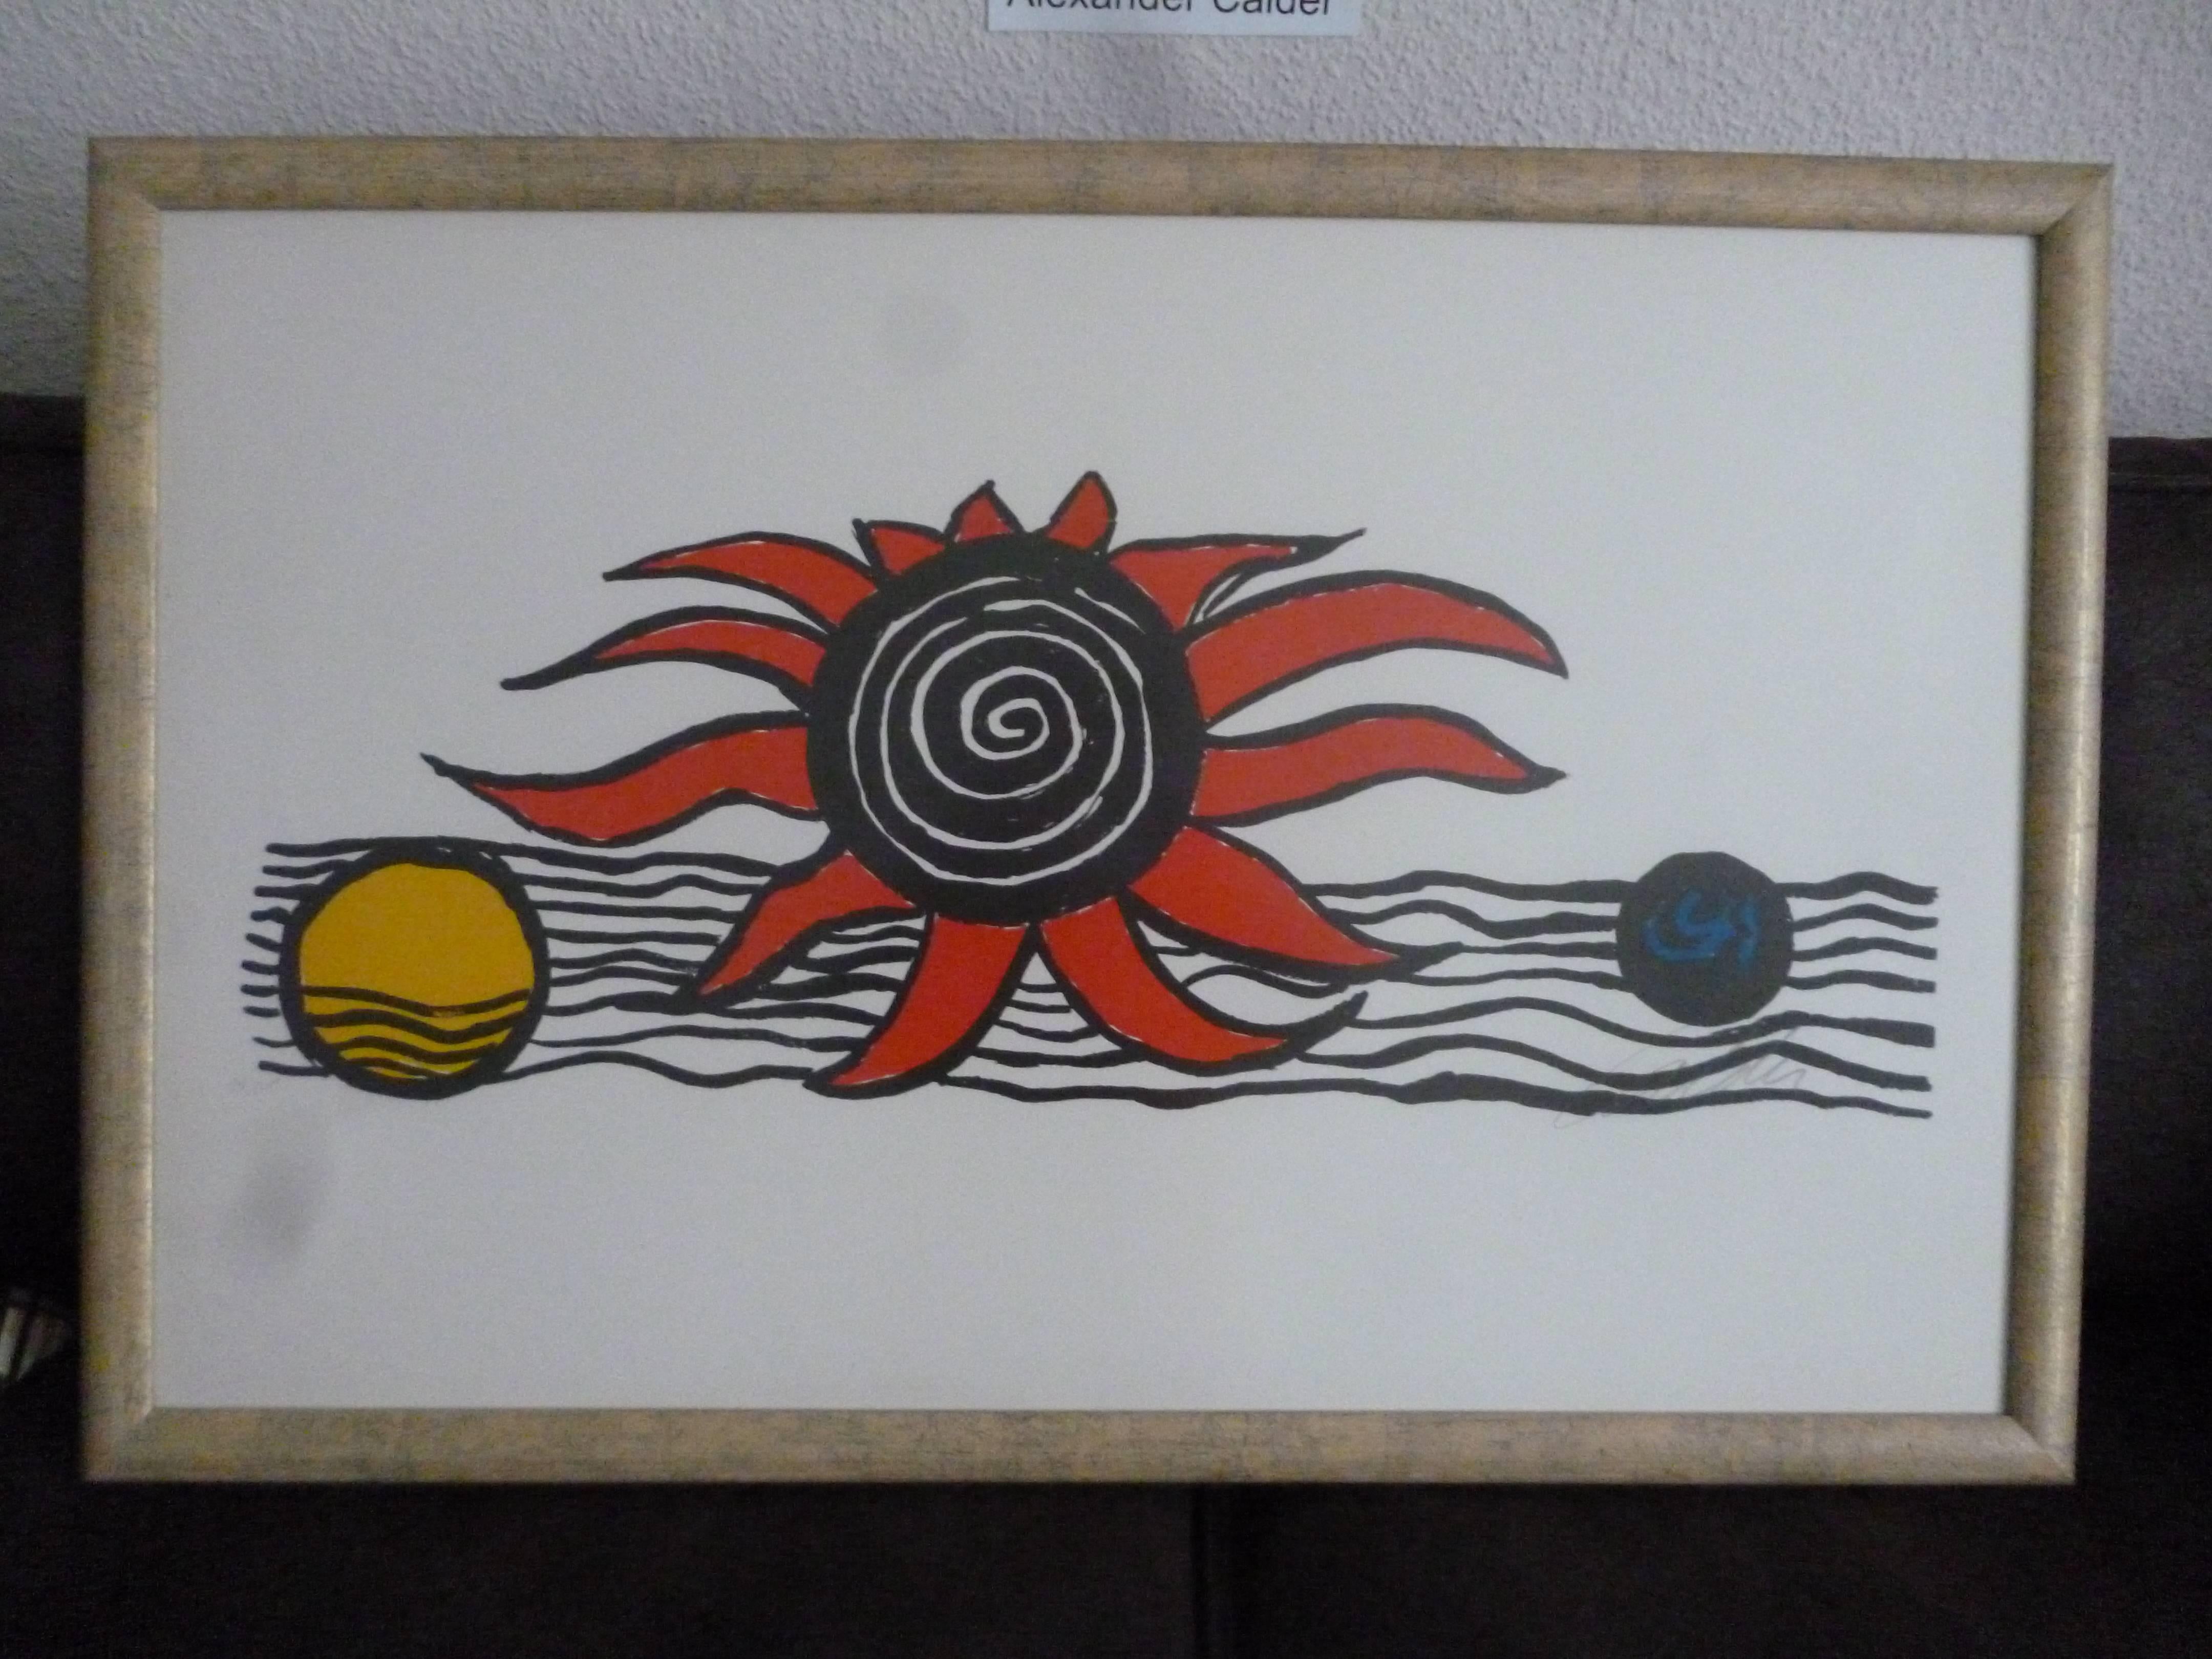 Alexander Calder Abstract Print - "Sonne und Mond" ( "Sun and moon" )